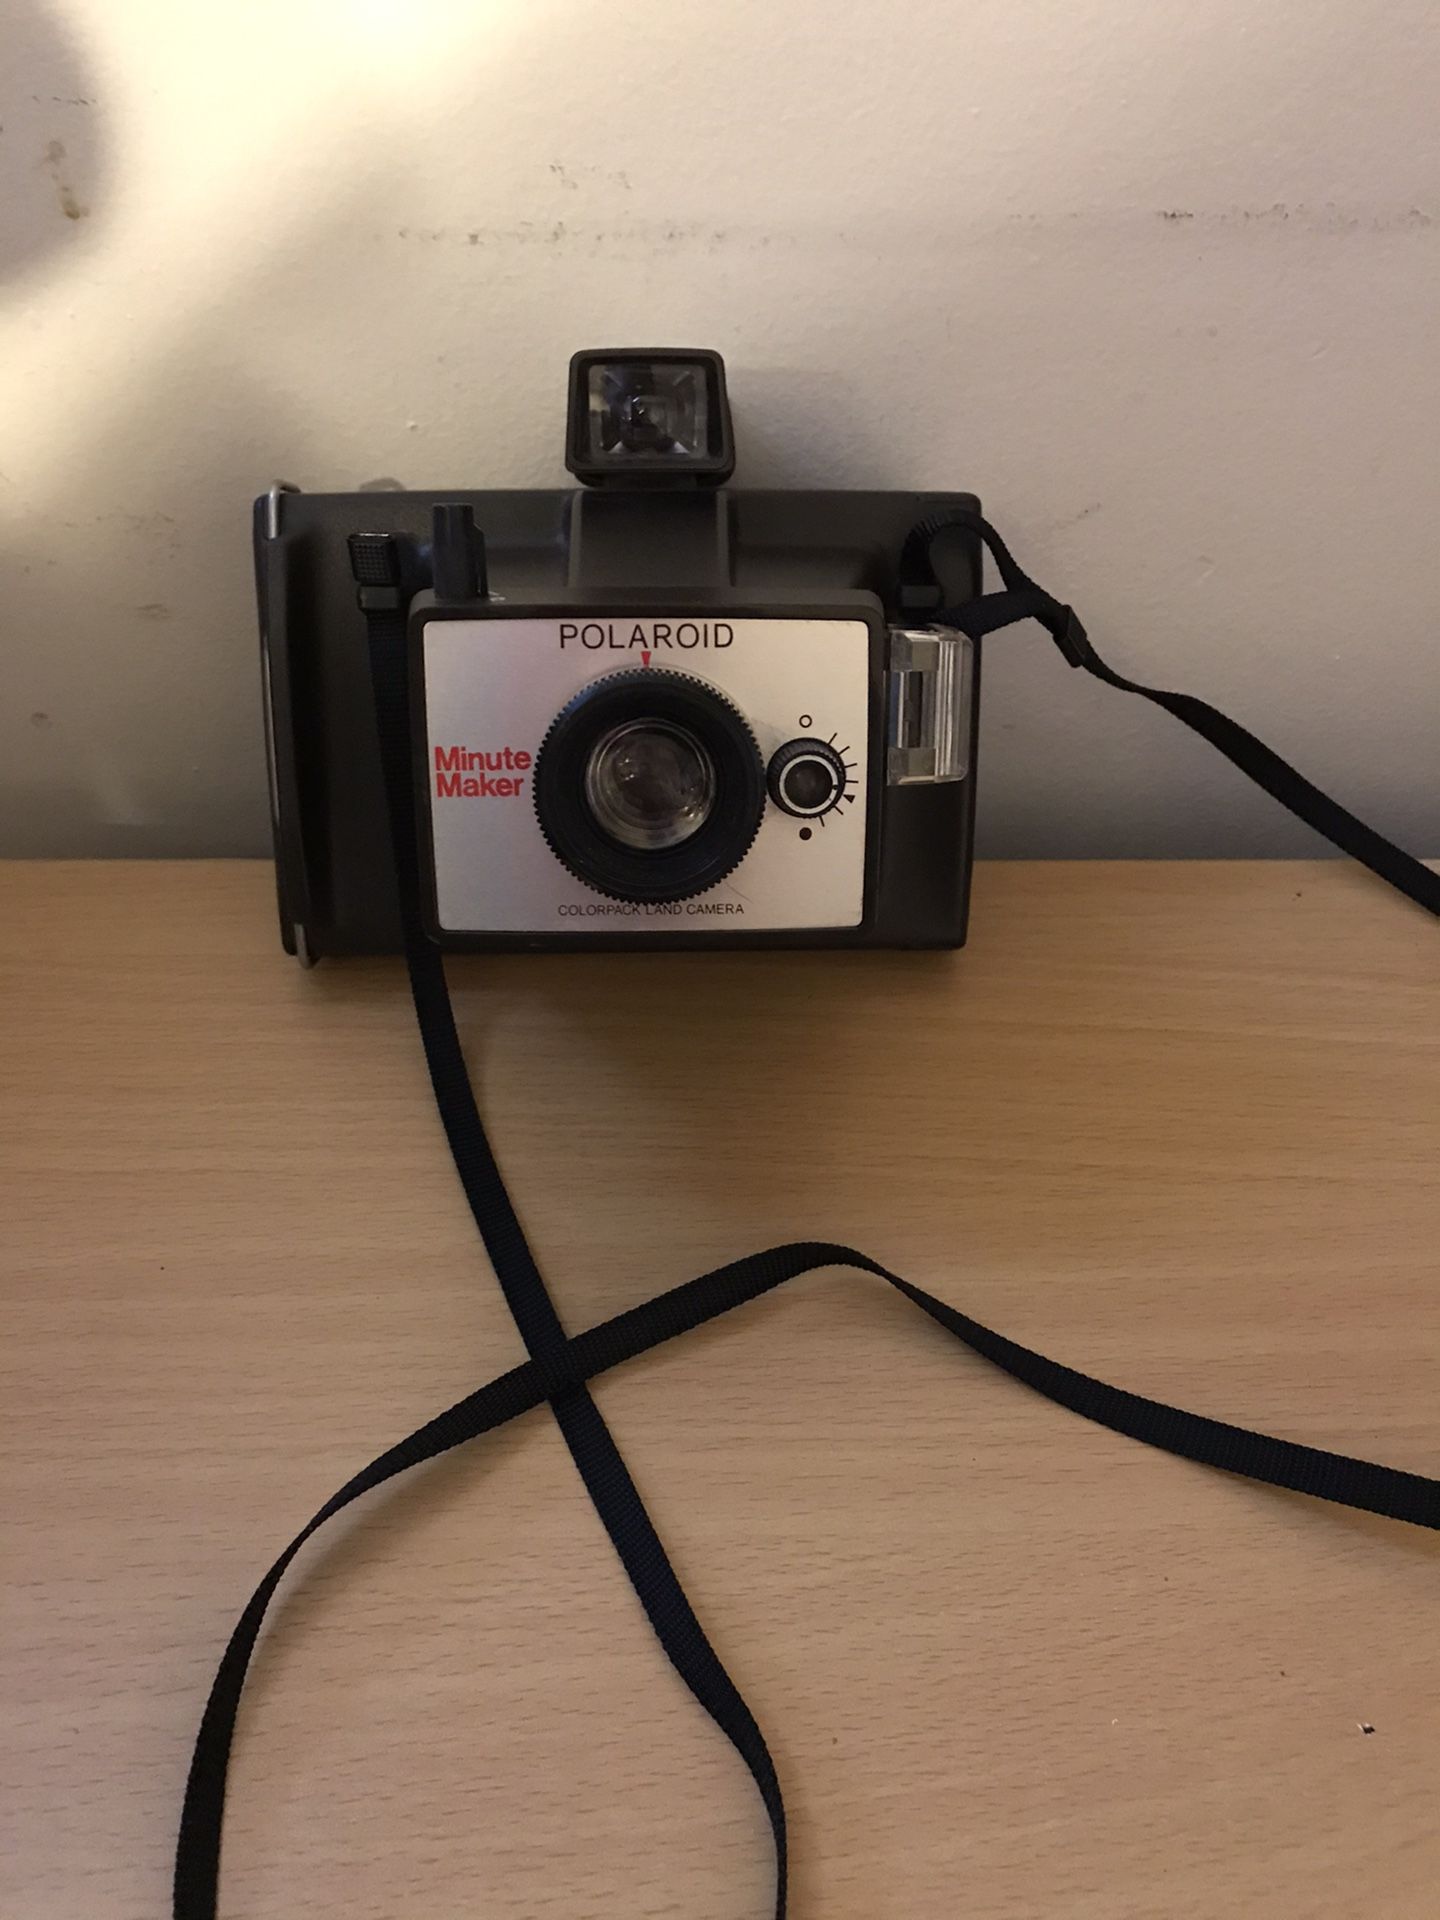 Polaroid minute maker camera